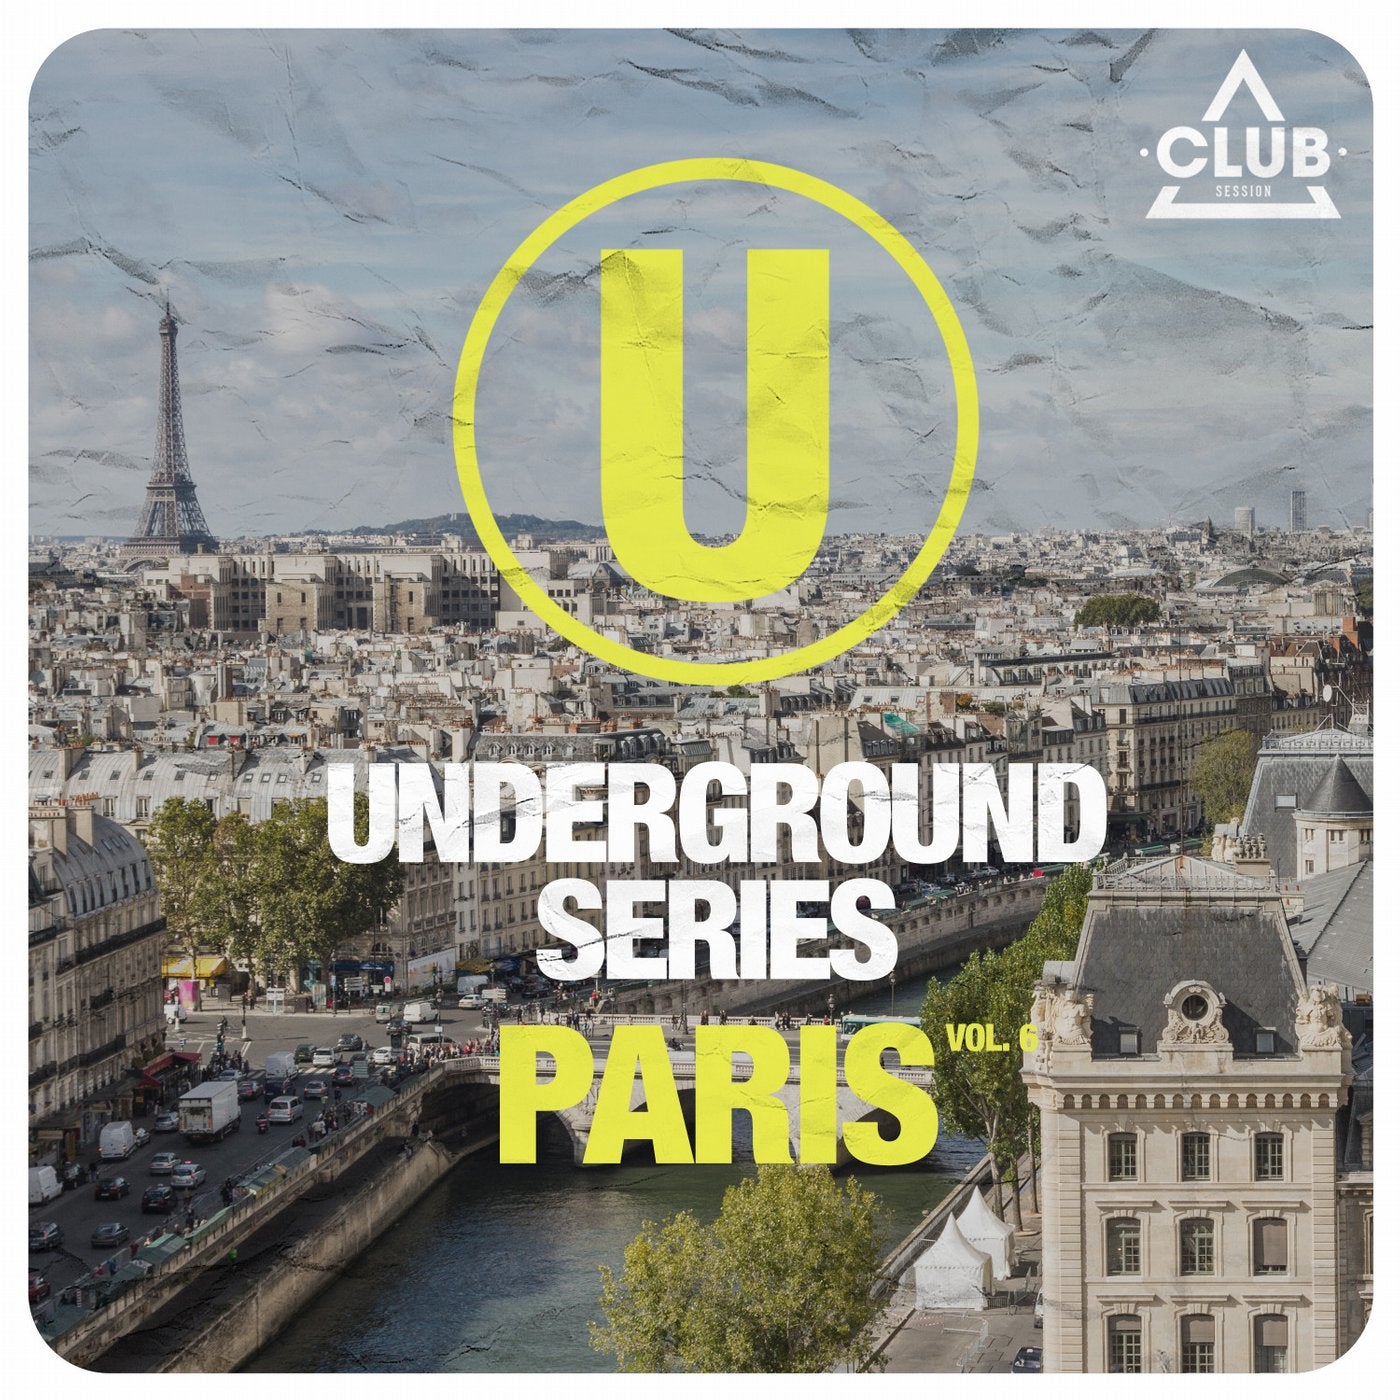 Underground Series Paris, Vol. 6